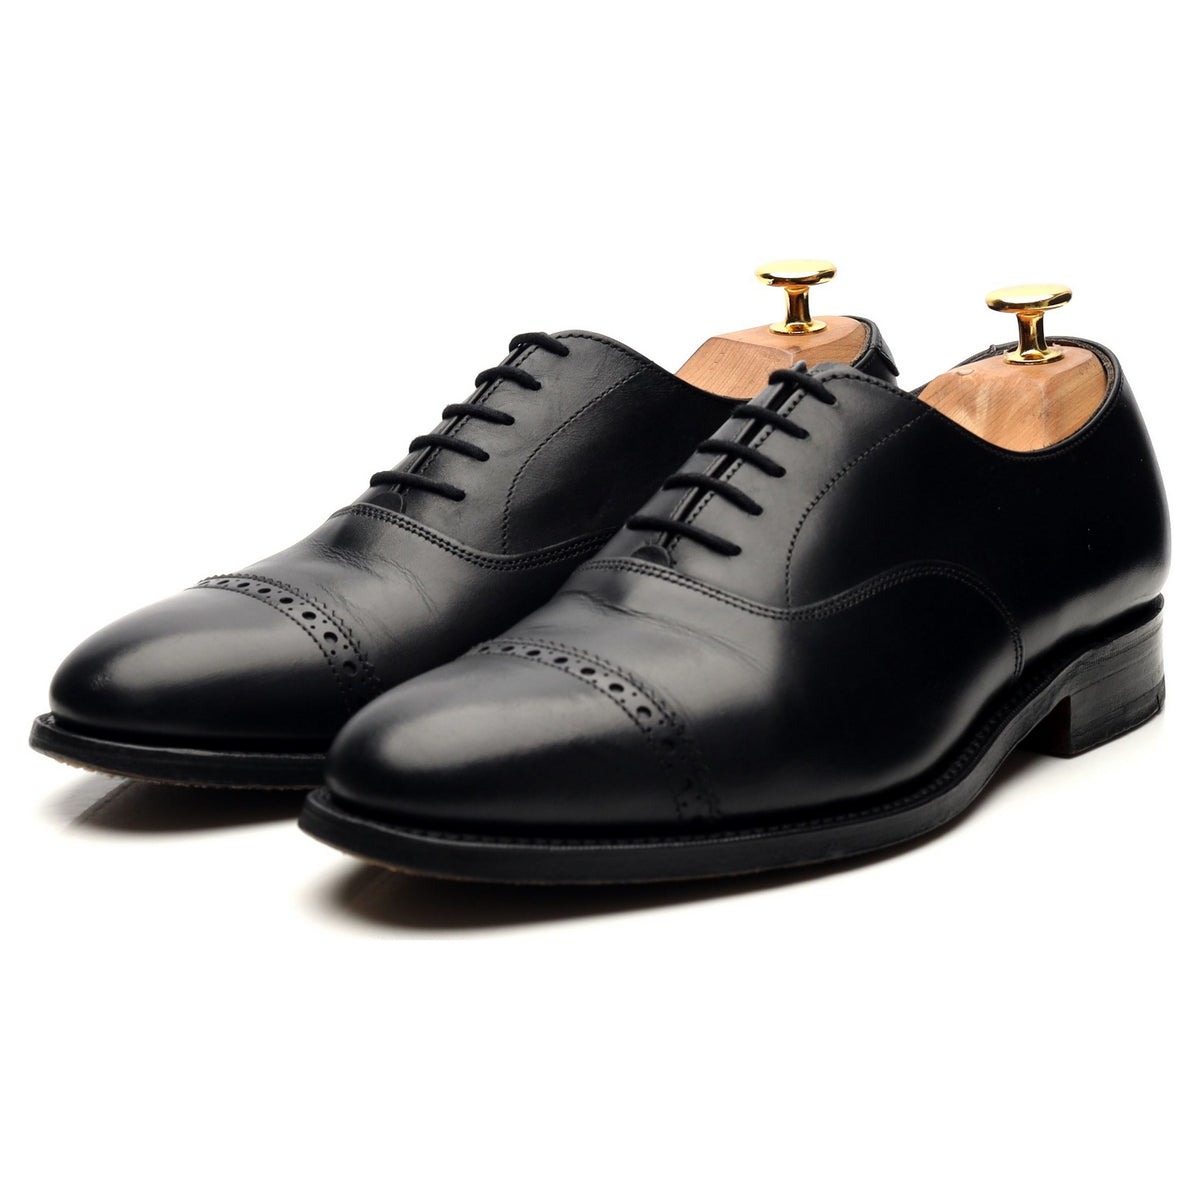 Black Leather Oxford UK 6.5